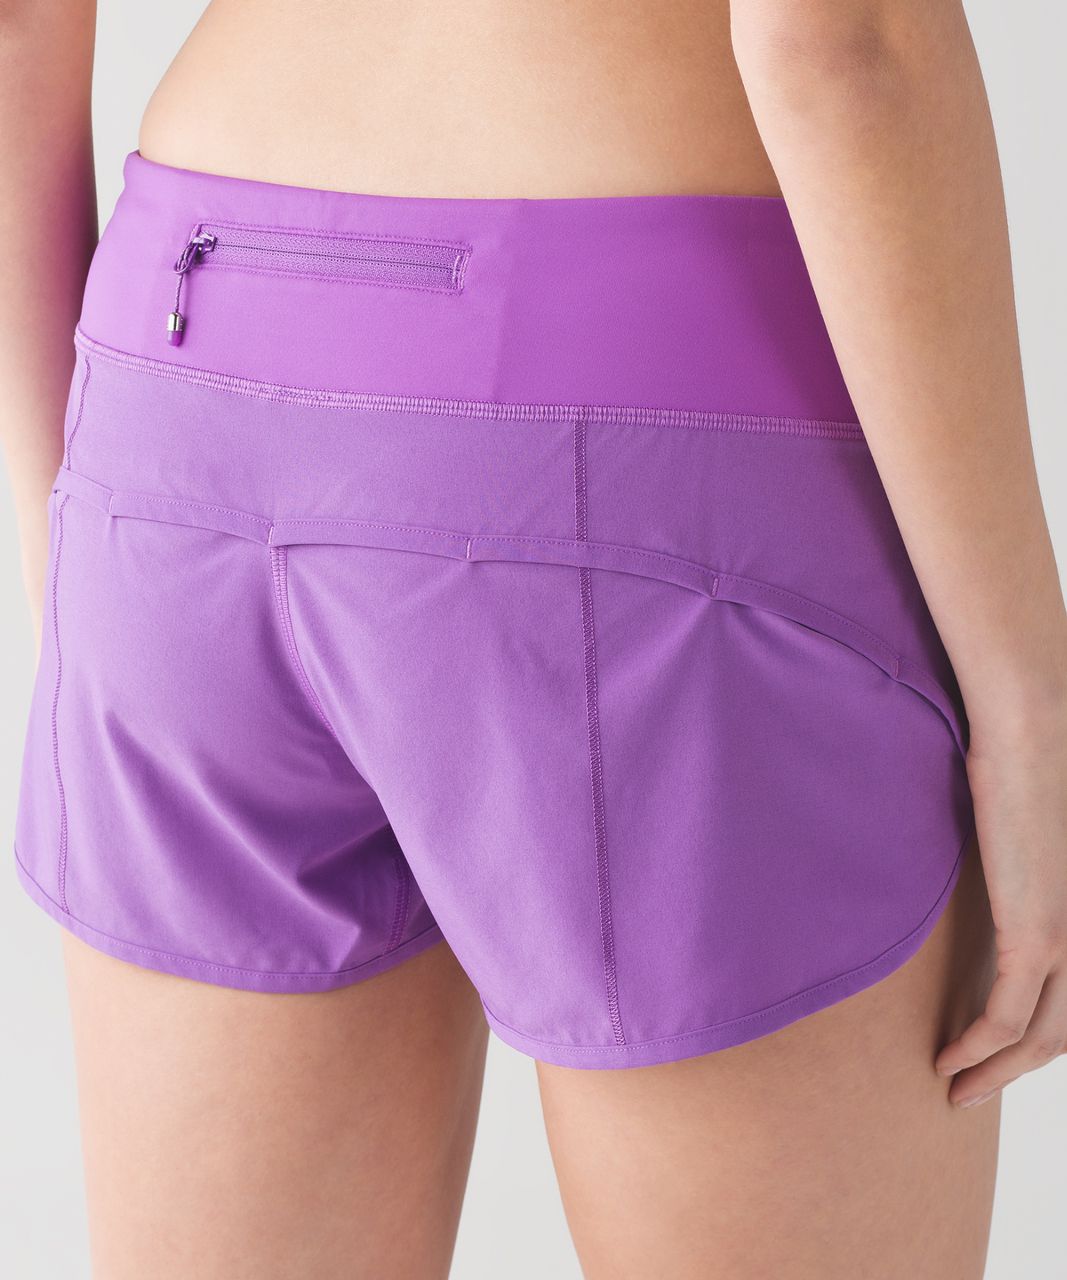 Lululemon Moonlit Magenta High Rise Hotty Hot Shorts 2.5” Size 6 - $110 New  With Tags - From Lululemon